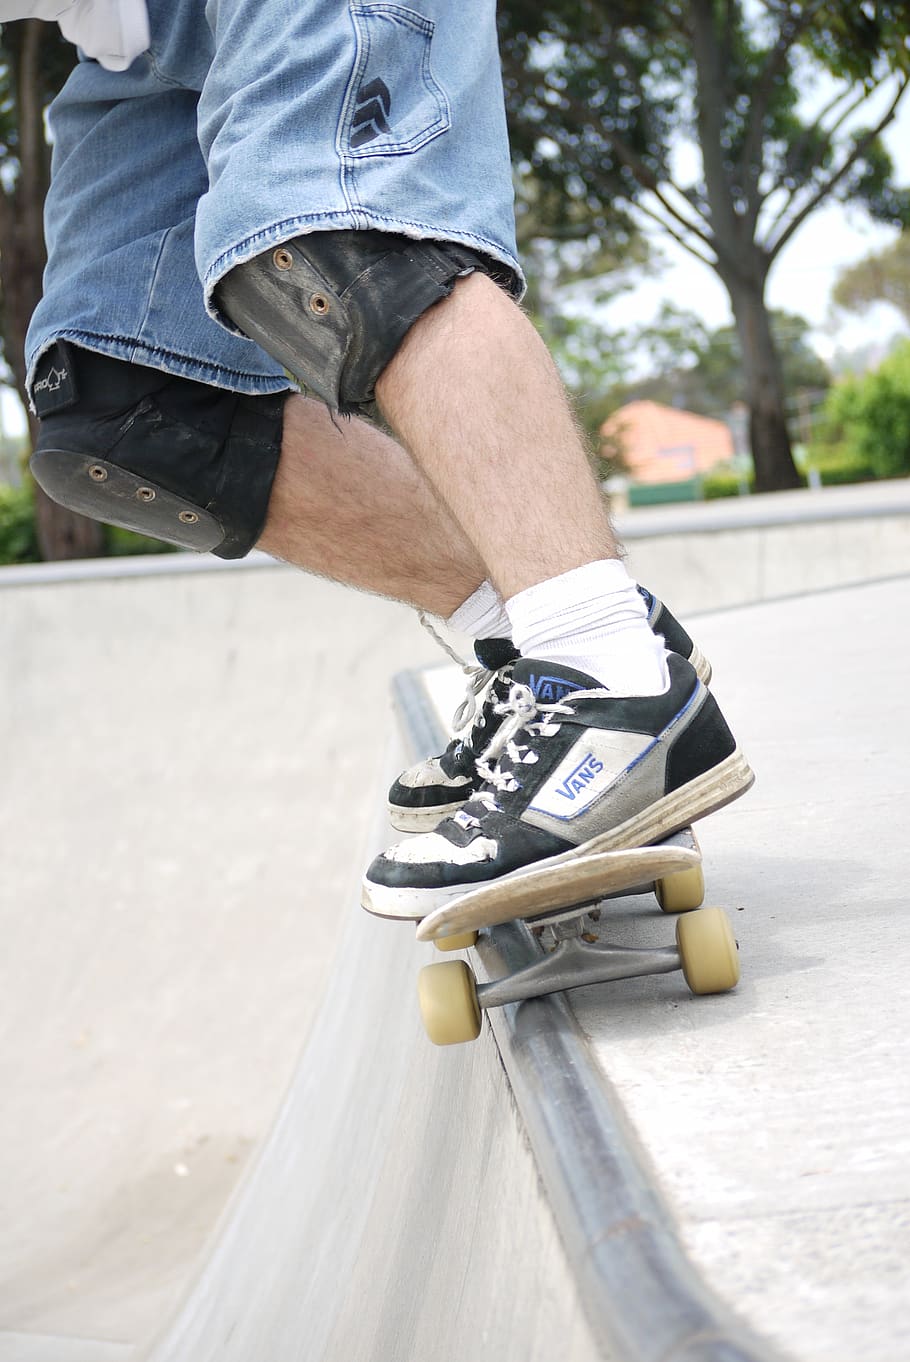 Skateboard, Skate, naik, pemain skateboard, ekstrim, olahraga, aktif, muda, aktivitas, Outdoor